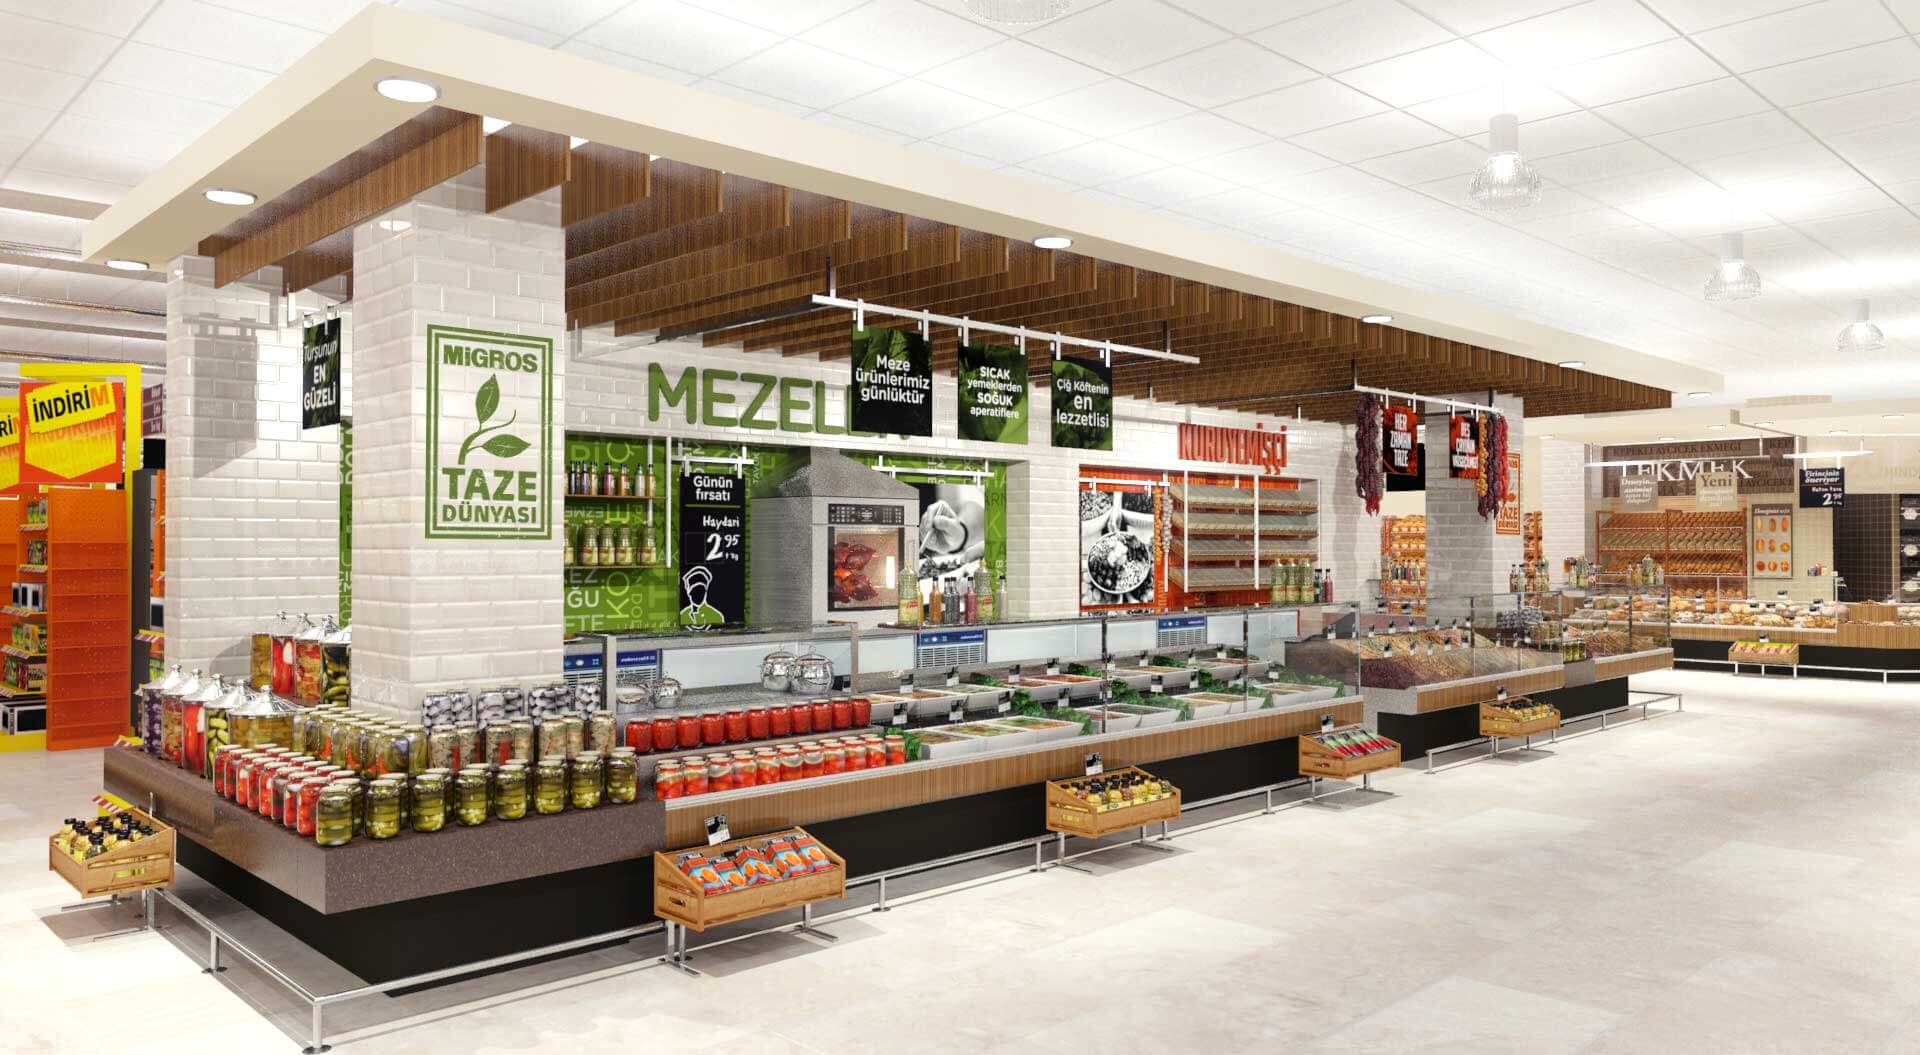 Visual of Migros Turkey supermarket delicatessan tratoria department store design and brand communications